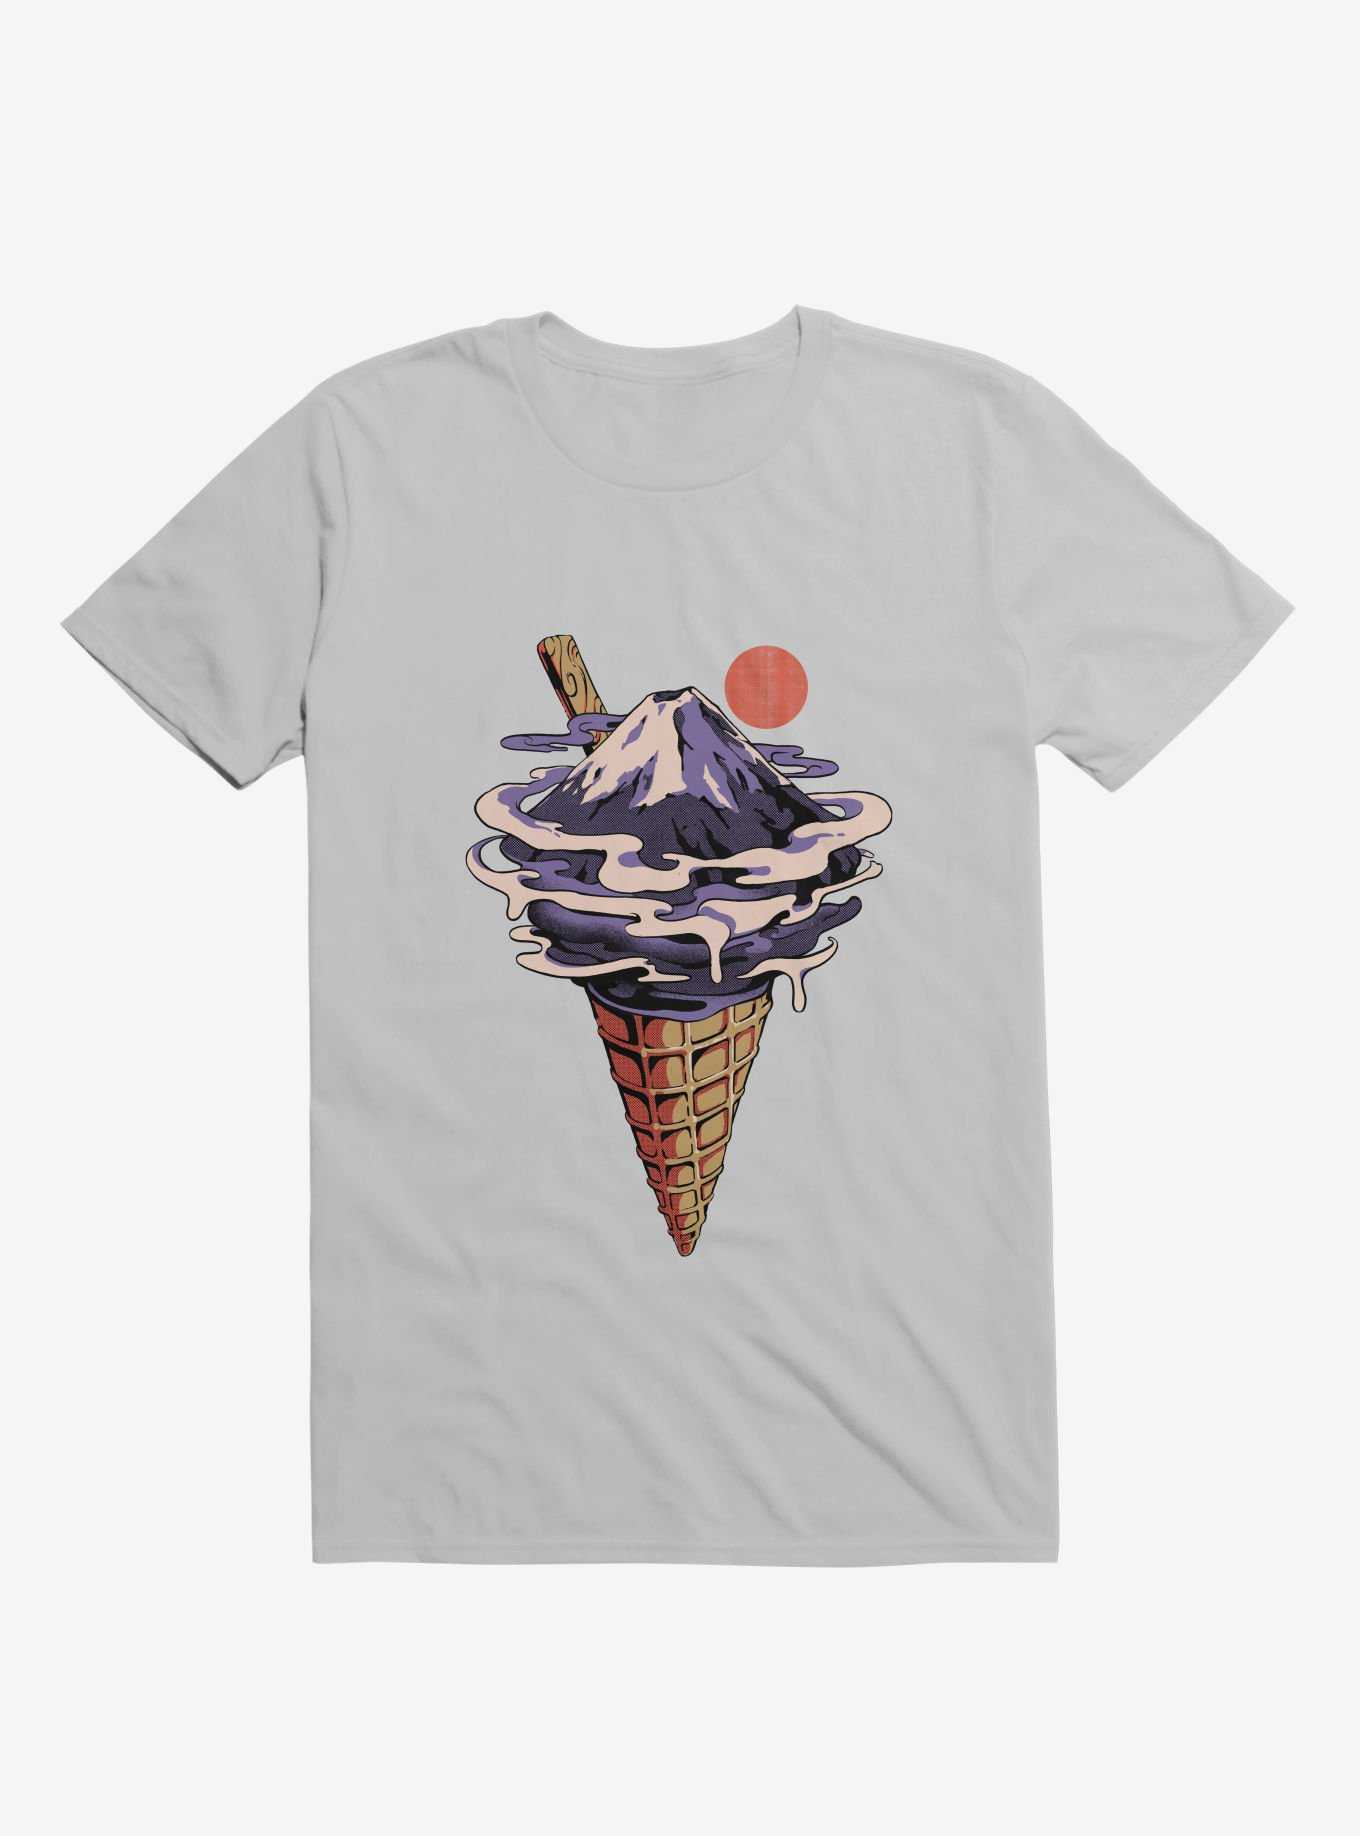 Fuji Flavor Ice Cream Ice Grey T-Shirt, , hi-res